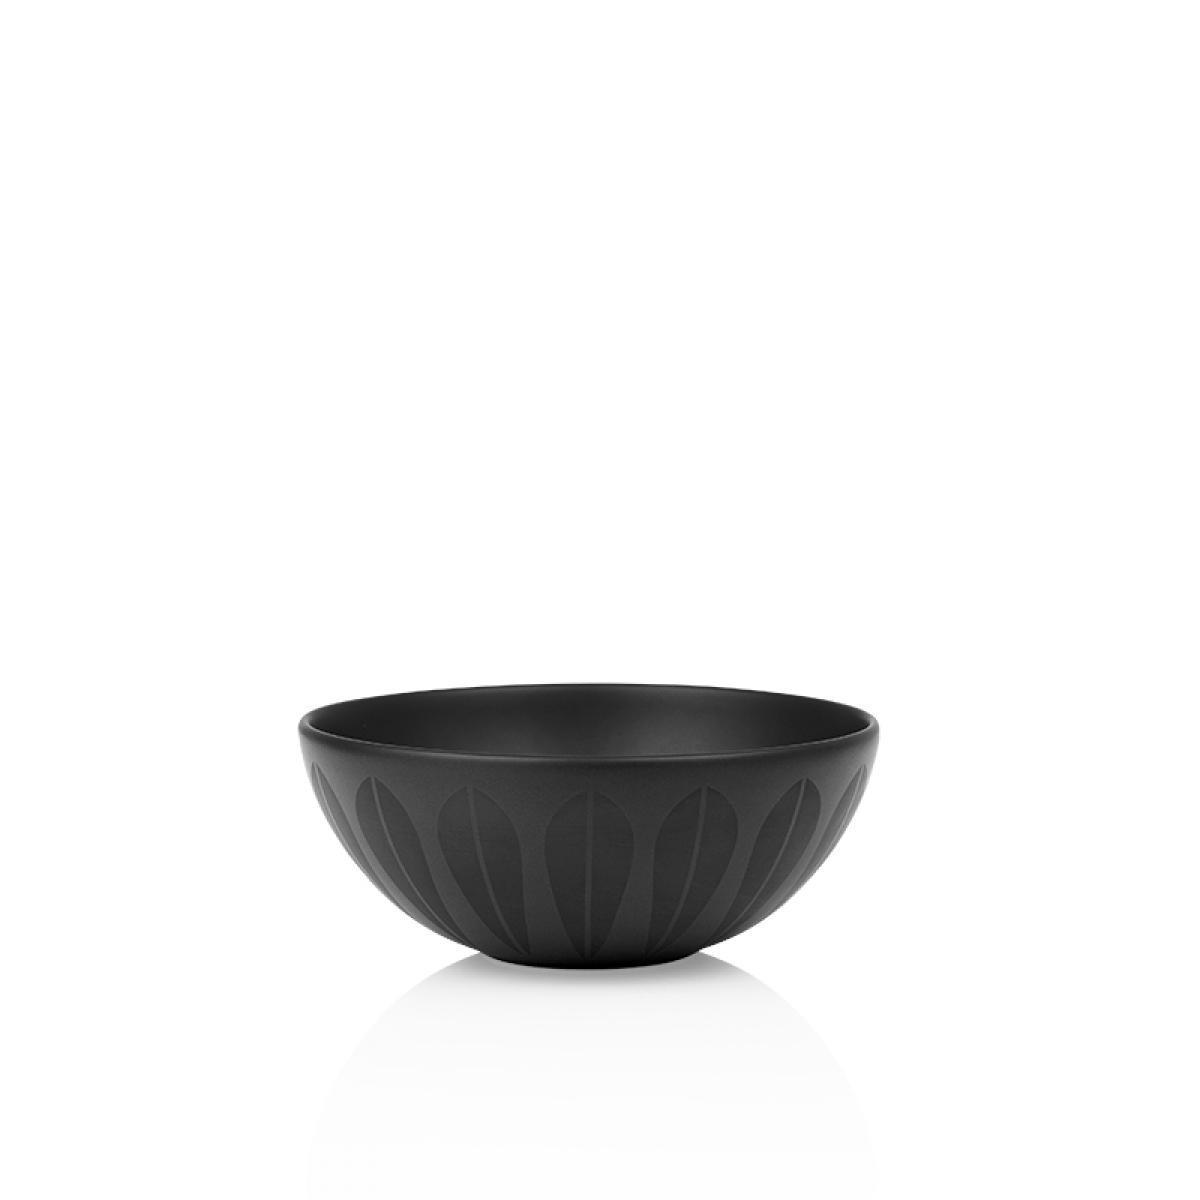 Lucie Kaas Arne Clausen Bowl černá, 18 cm